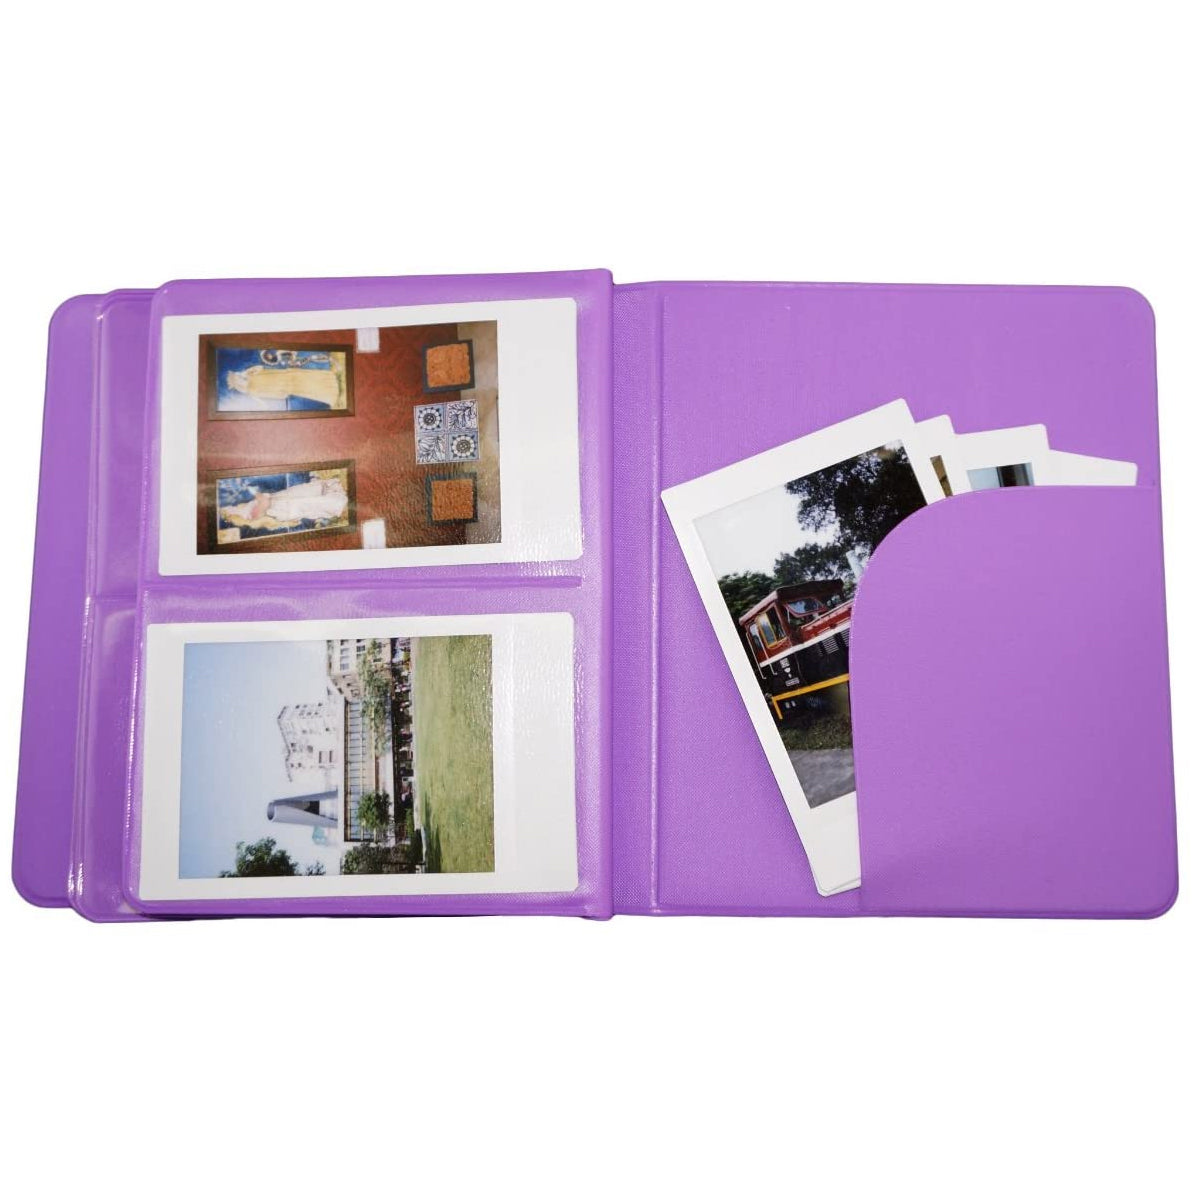 Fujifilm Instax Mini 10X1 pink lemonade Instant Film with Instax Time Photo Album 64 Sheets (Violet Purple)